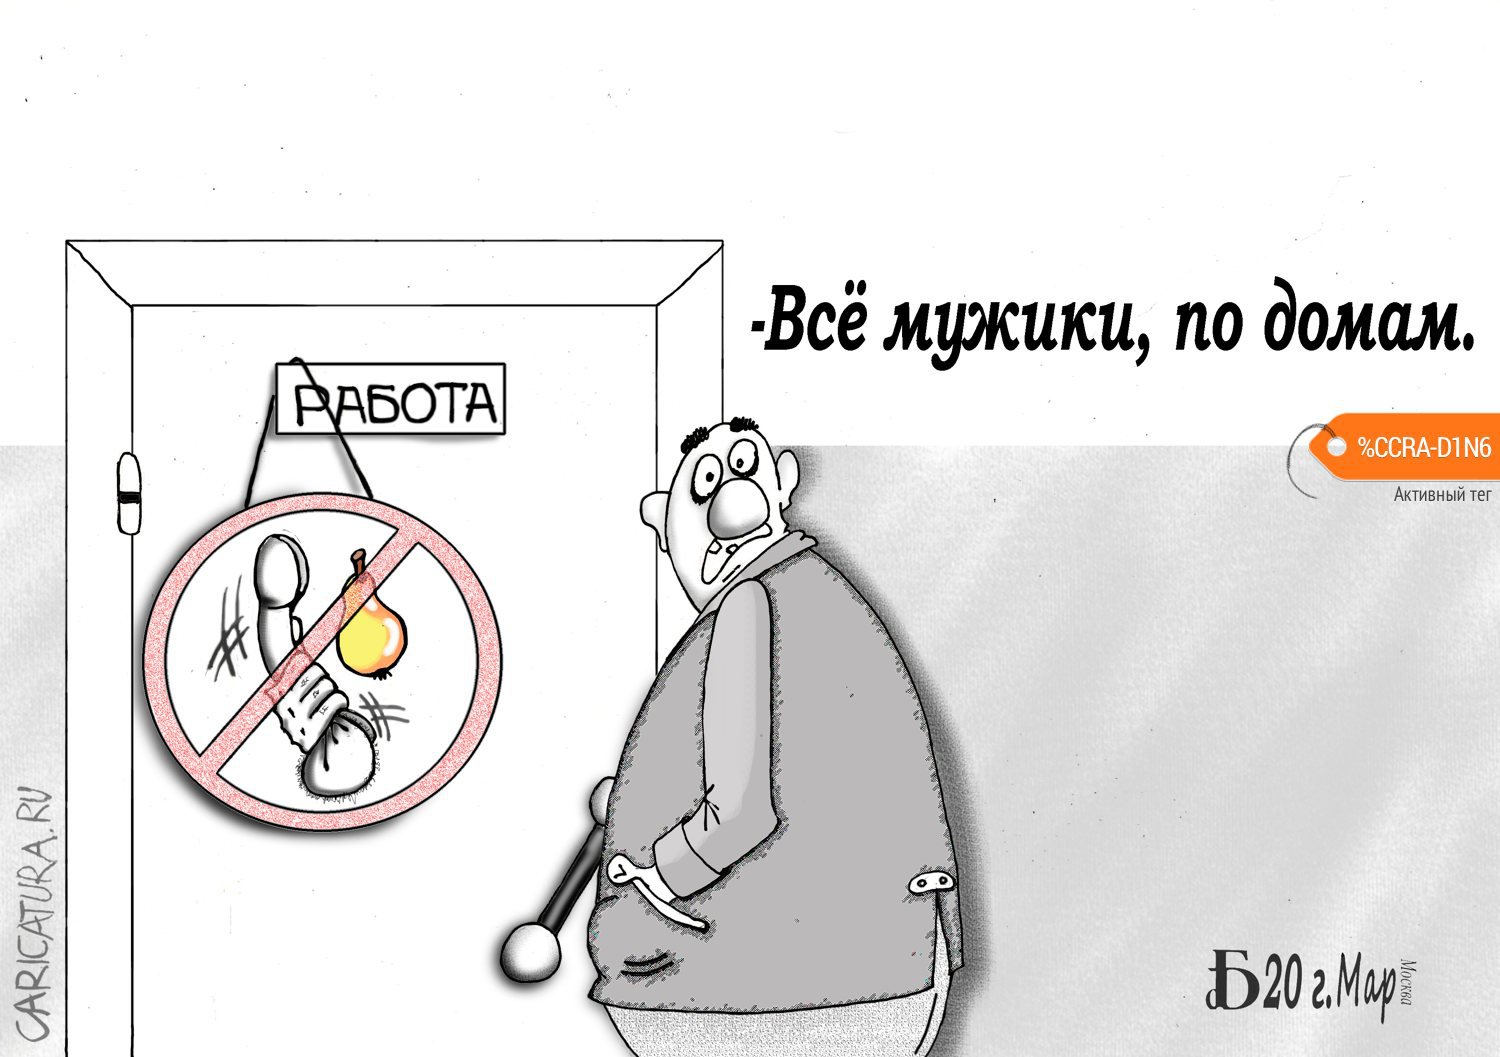 Карикатура "Проподомам", Борис Демин